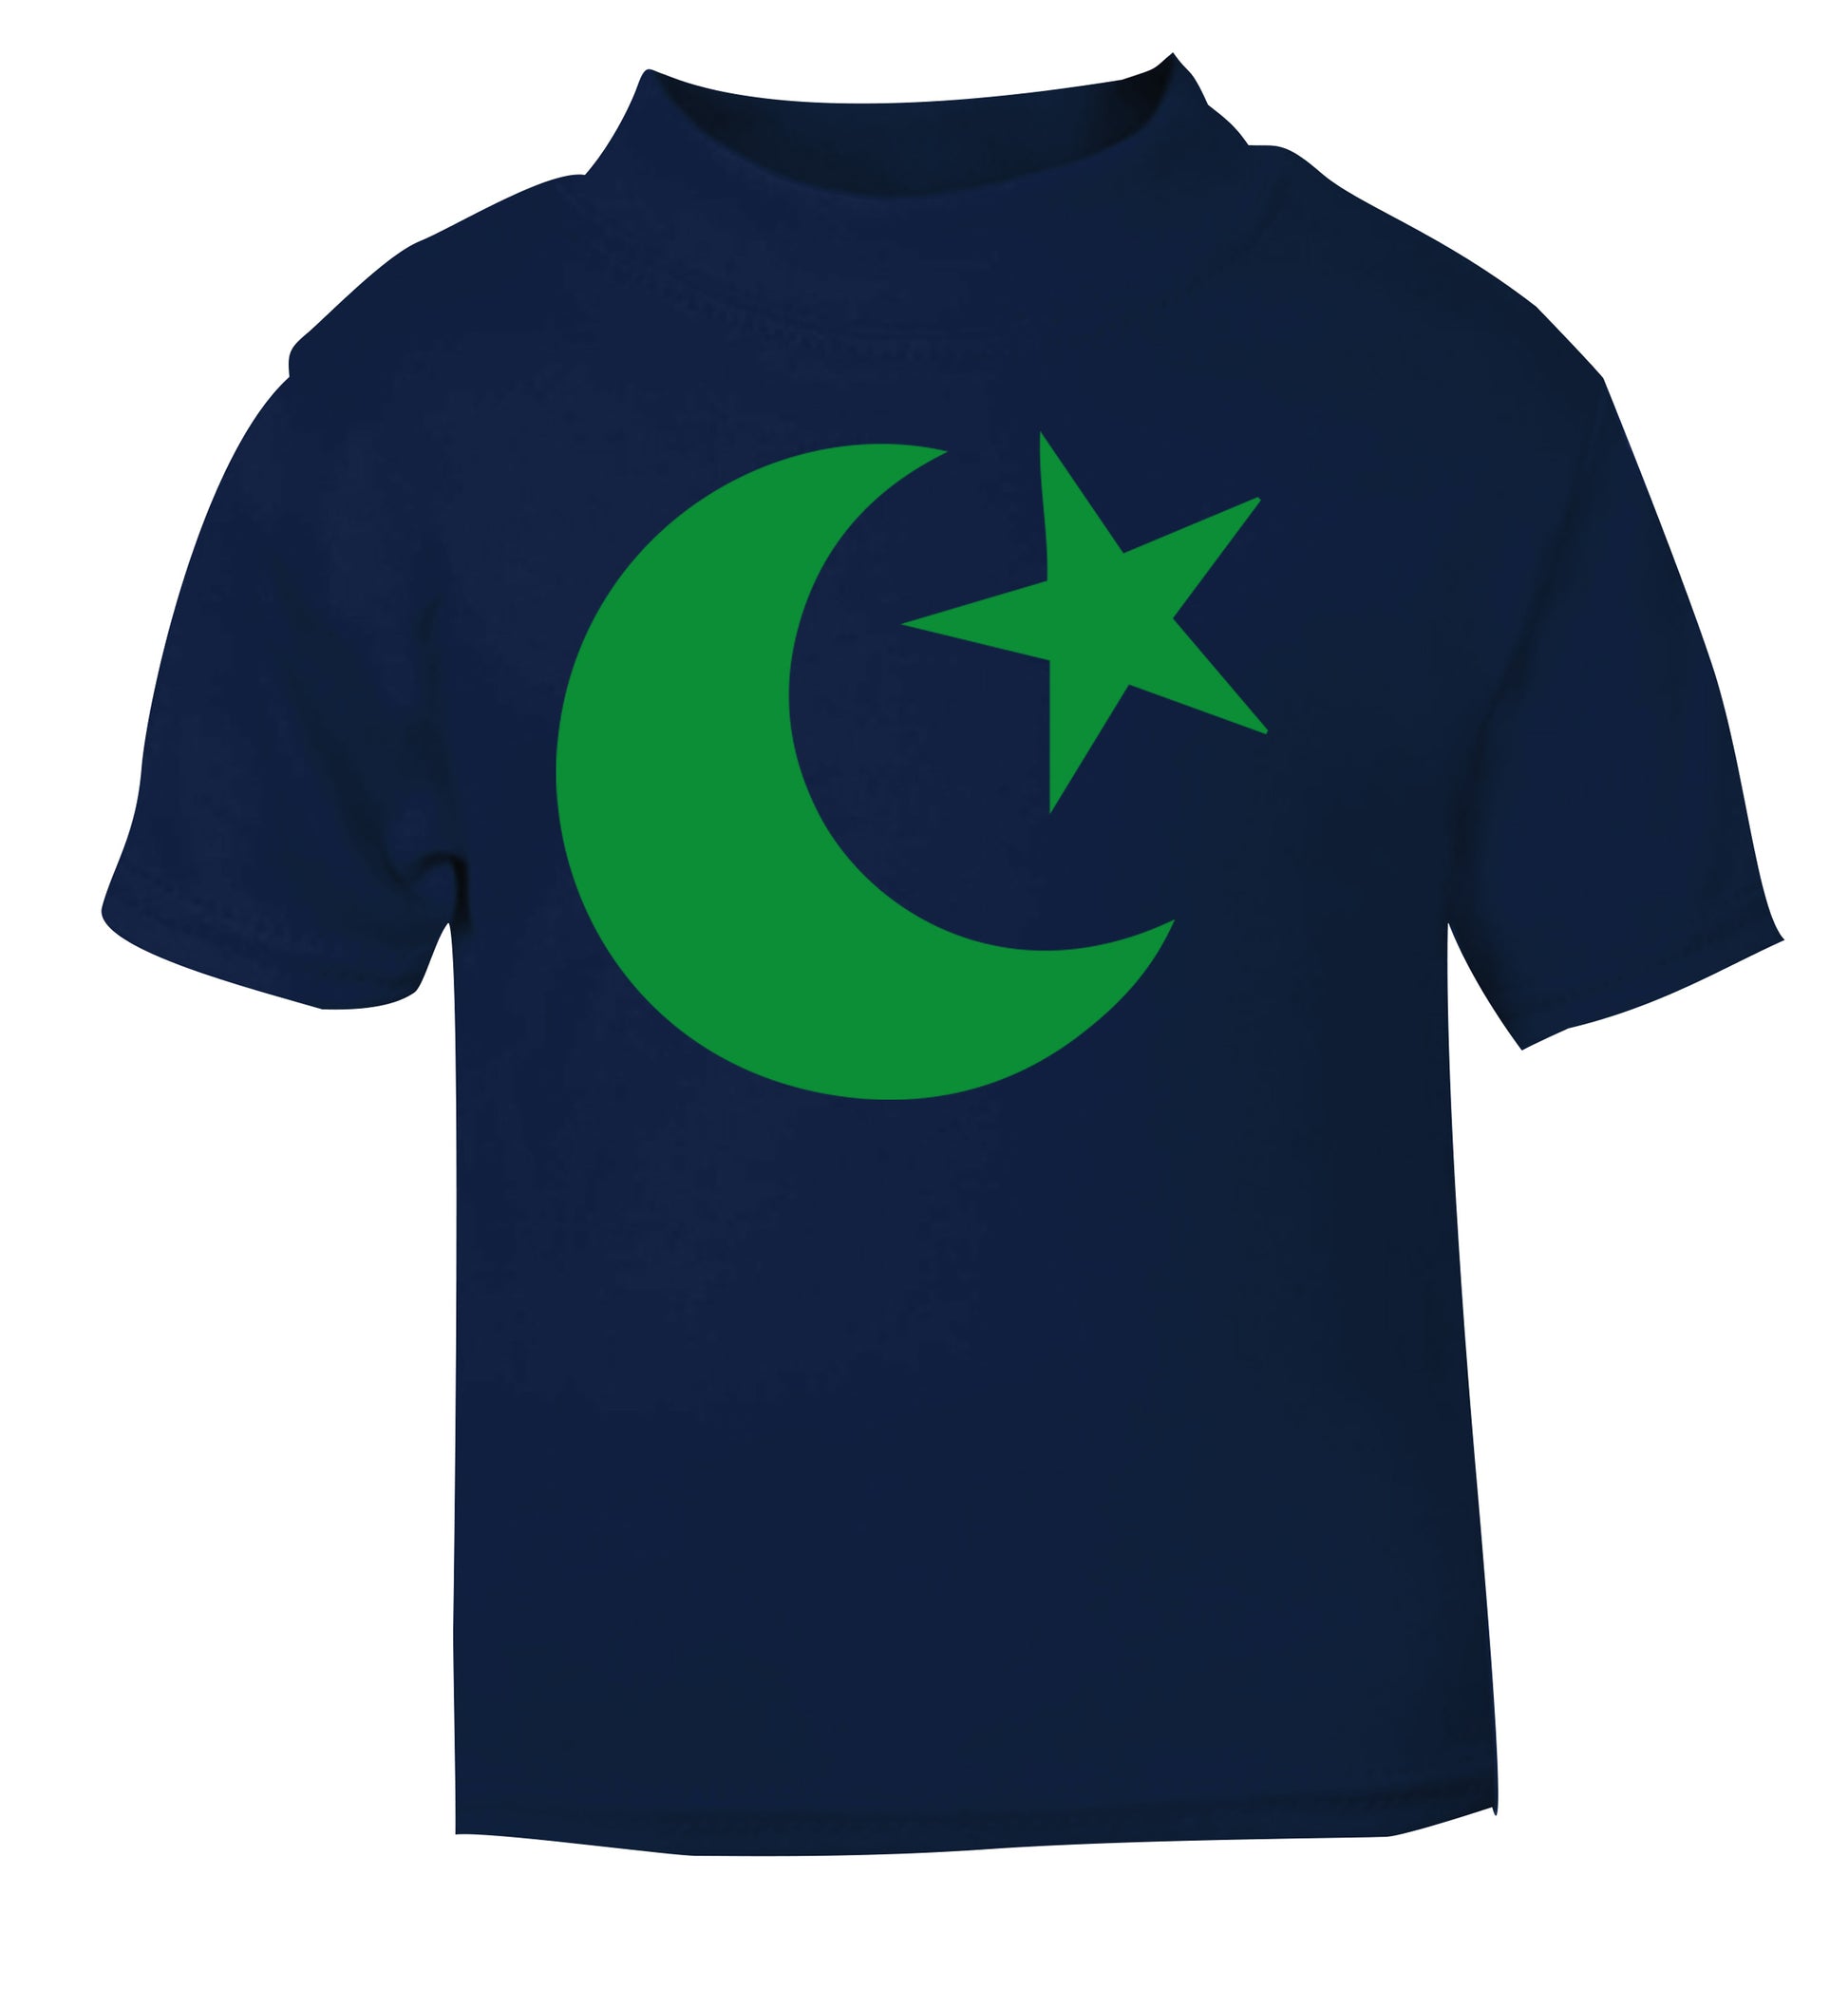 Eid symbol navy baby toddler Tshirt 2 Years